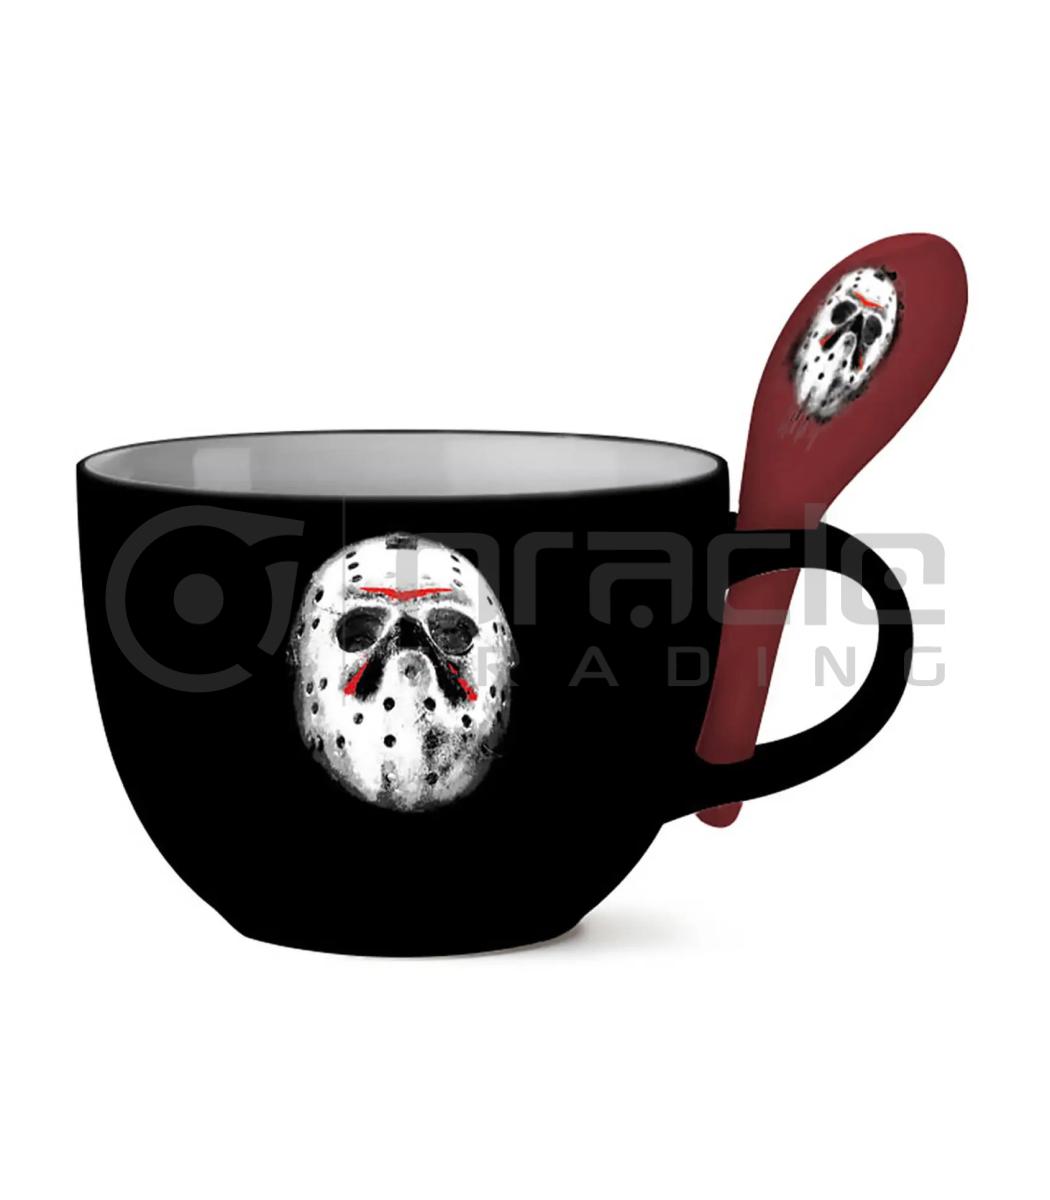 Jason Mask Soup Mug & Spoon (Friday the 13th)